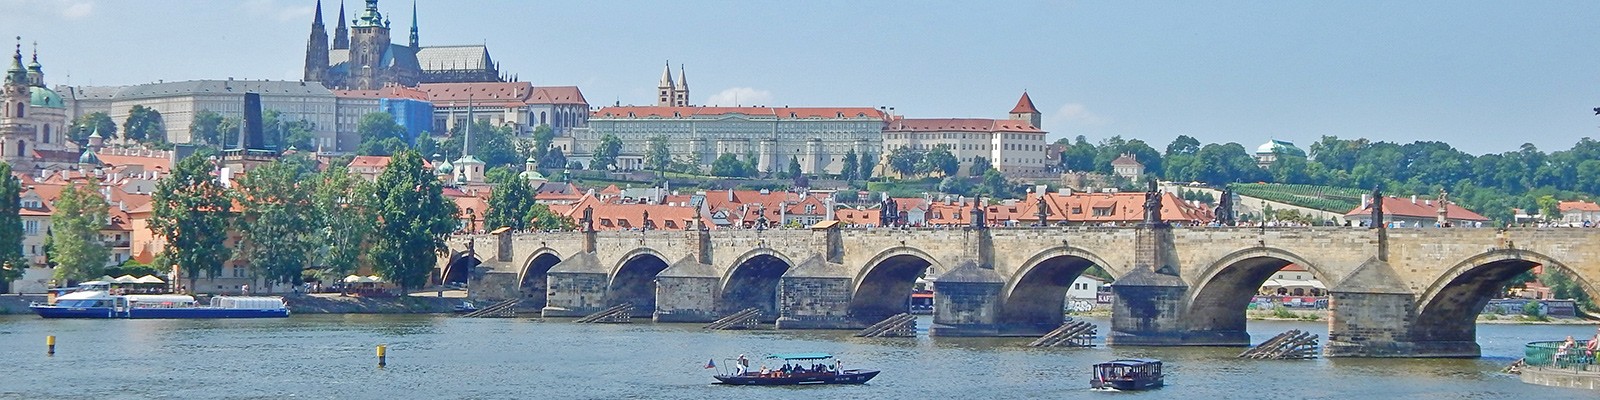 History of Prague